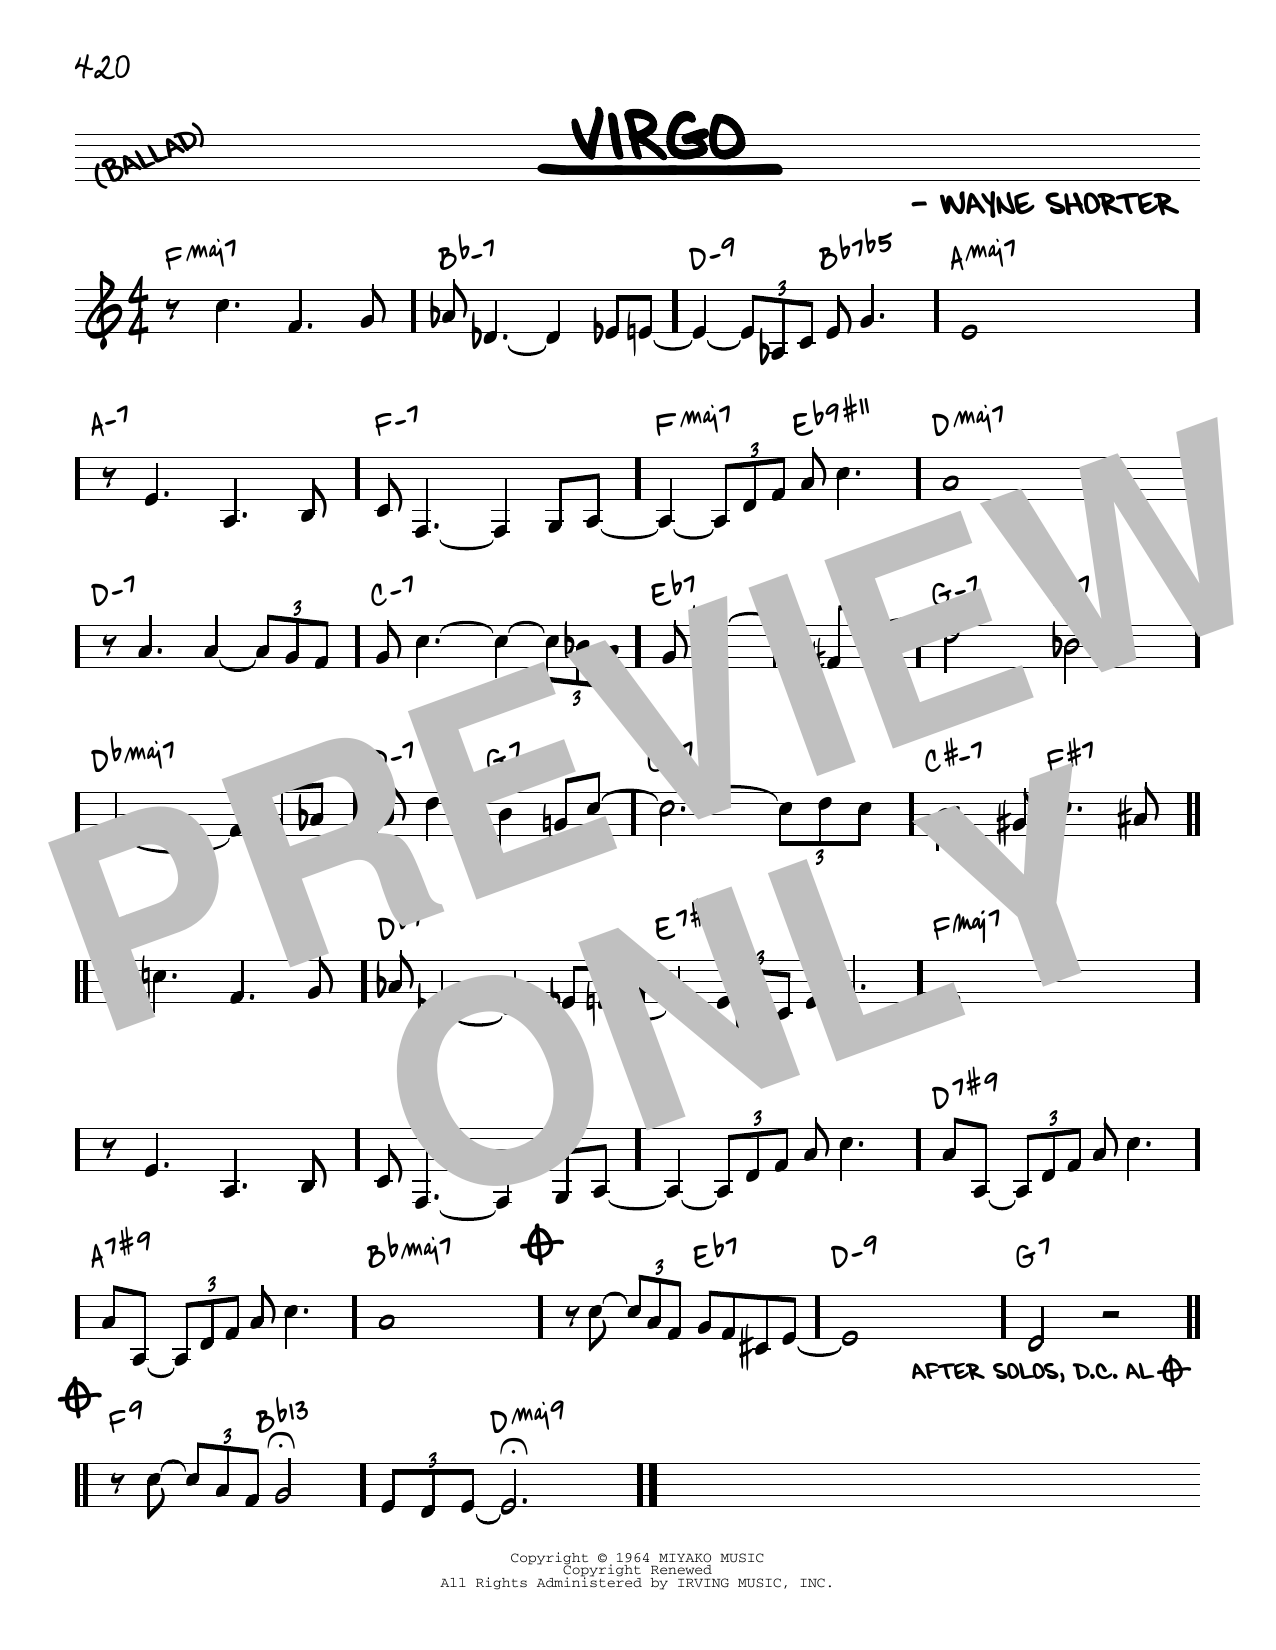 Wayne Shorter Virgo [Reharmonized version] (arr. Jack Grassel) Sheet Music Notes & Chords for Real Book – Melody & Chords - Download or Print PDF